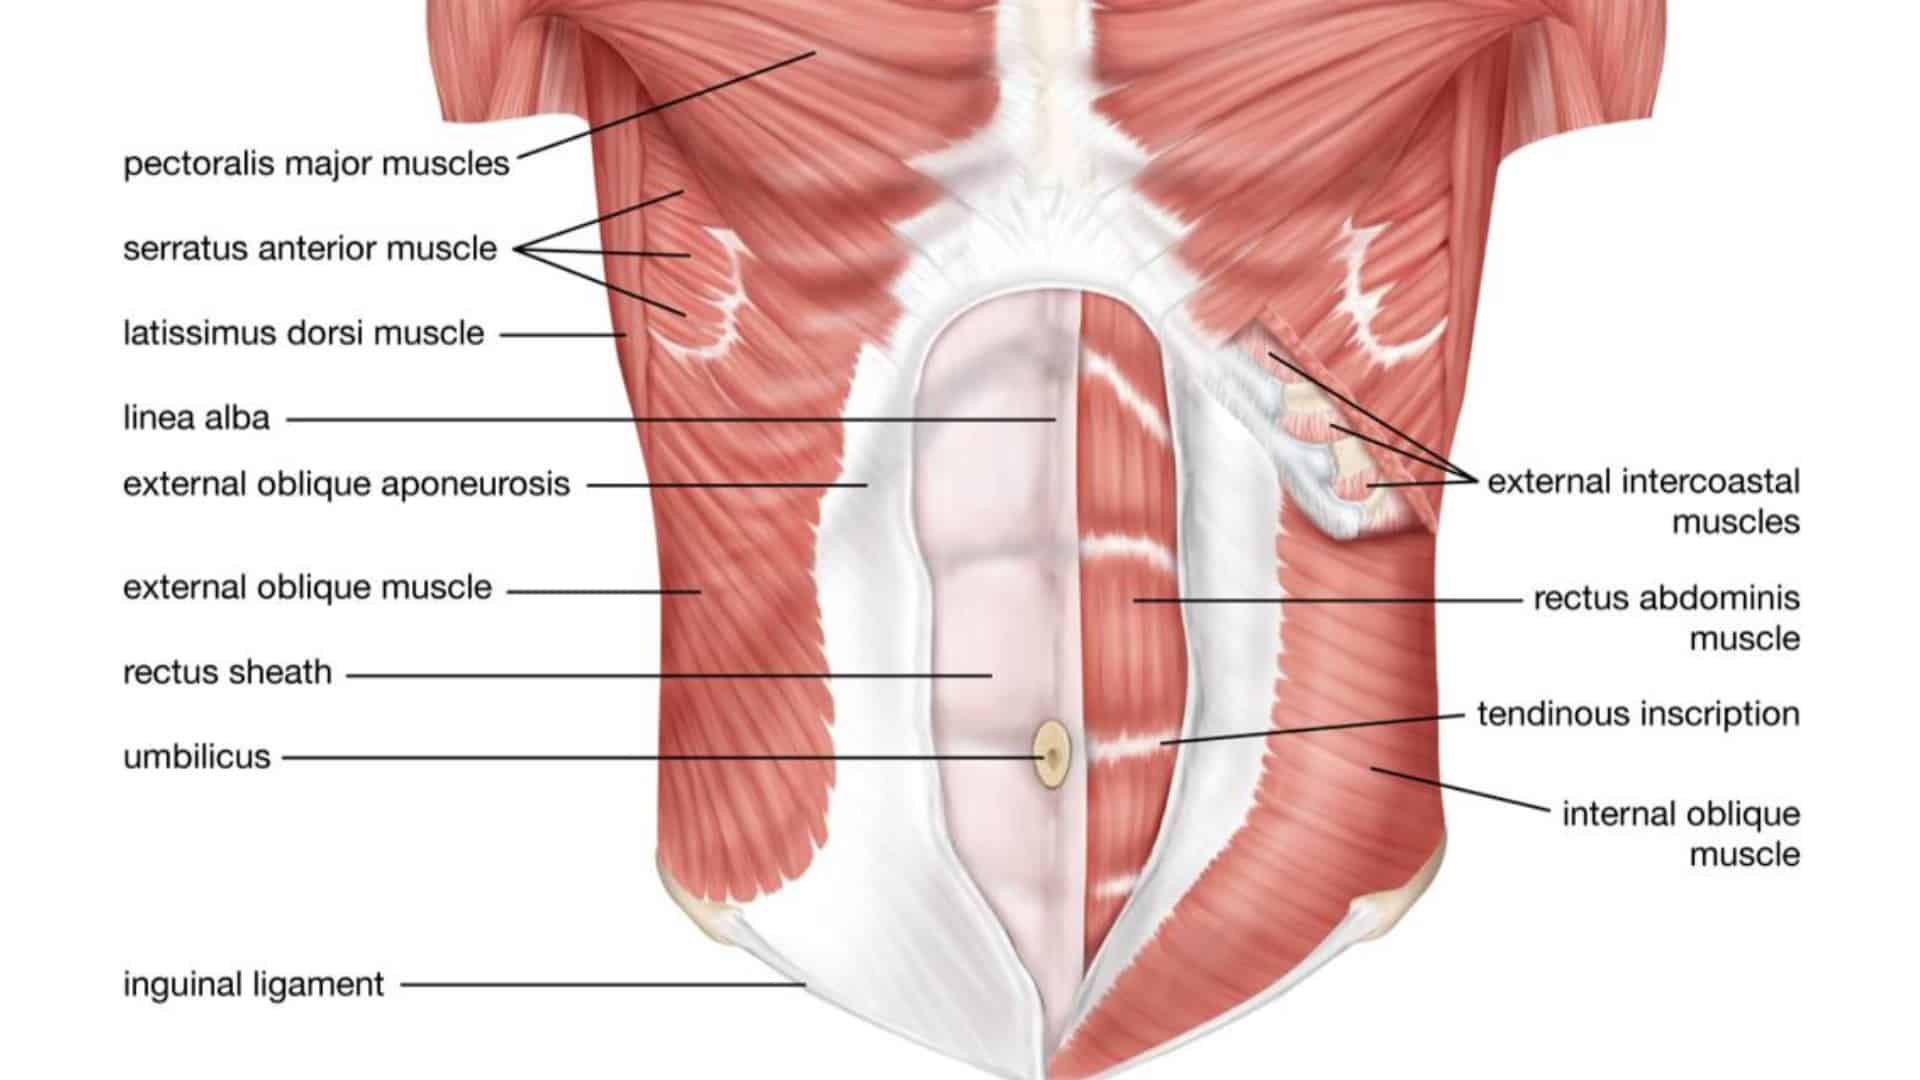 Rectus Abdominis, external oblique, internal oblique and transverses abdominis,